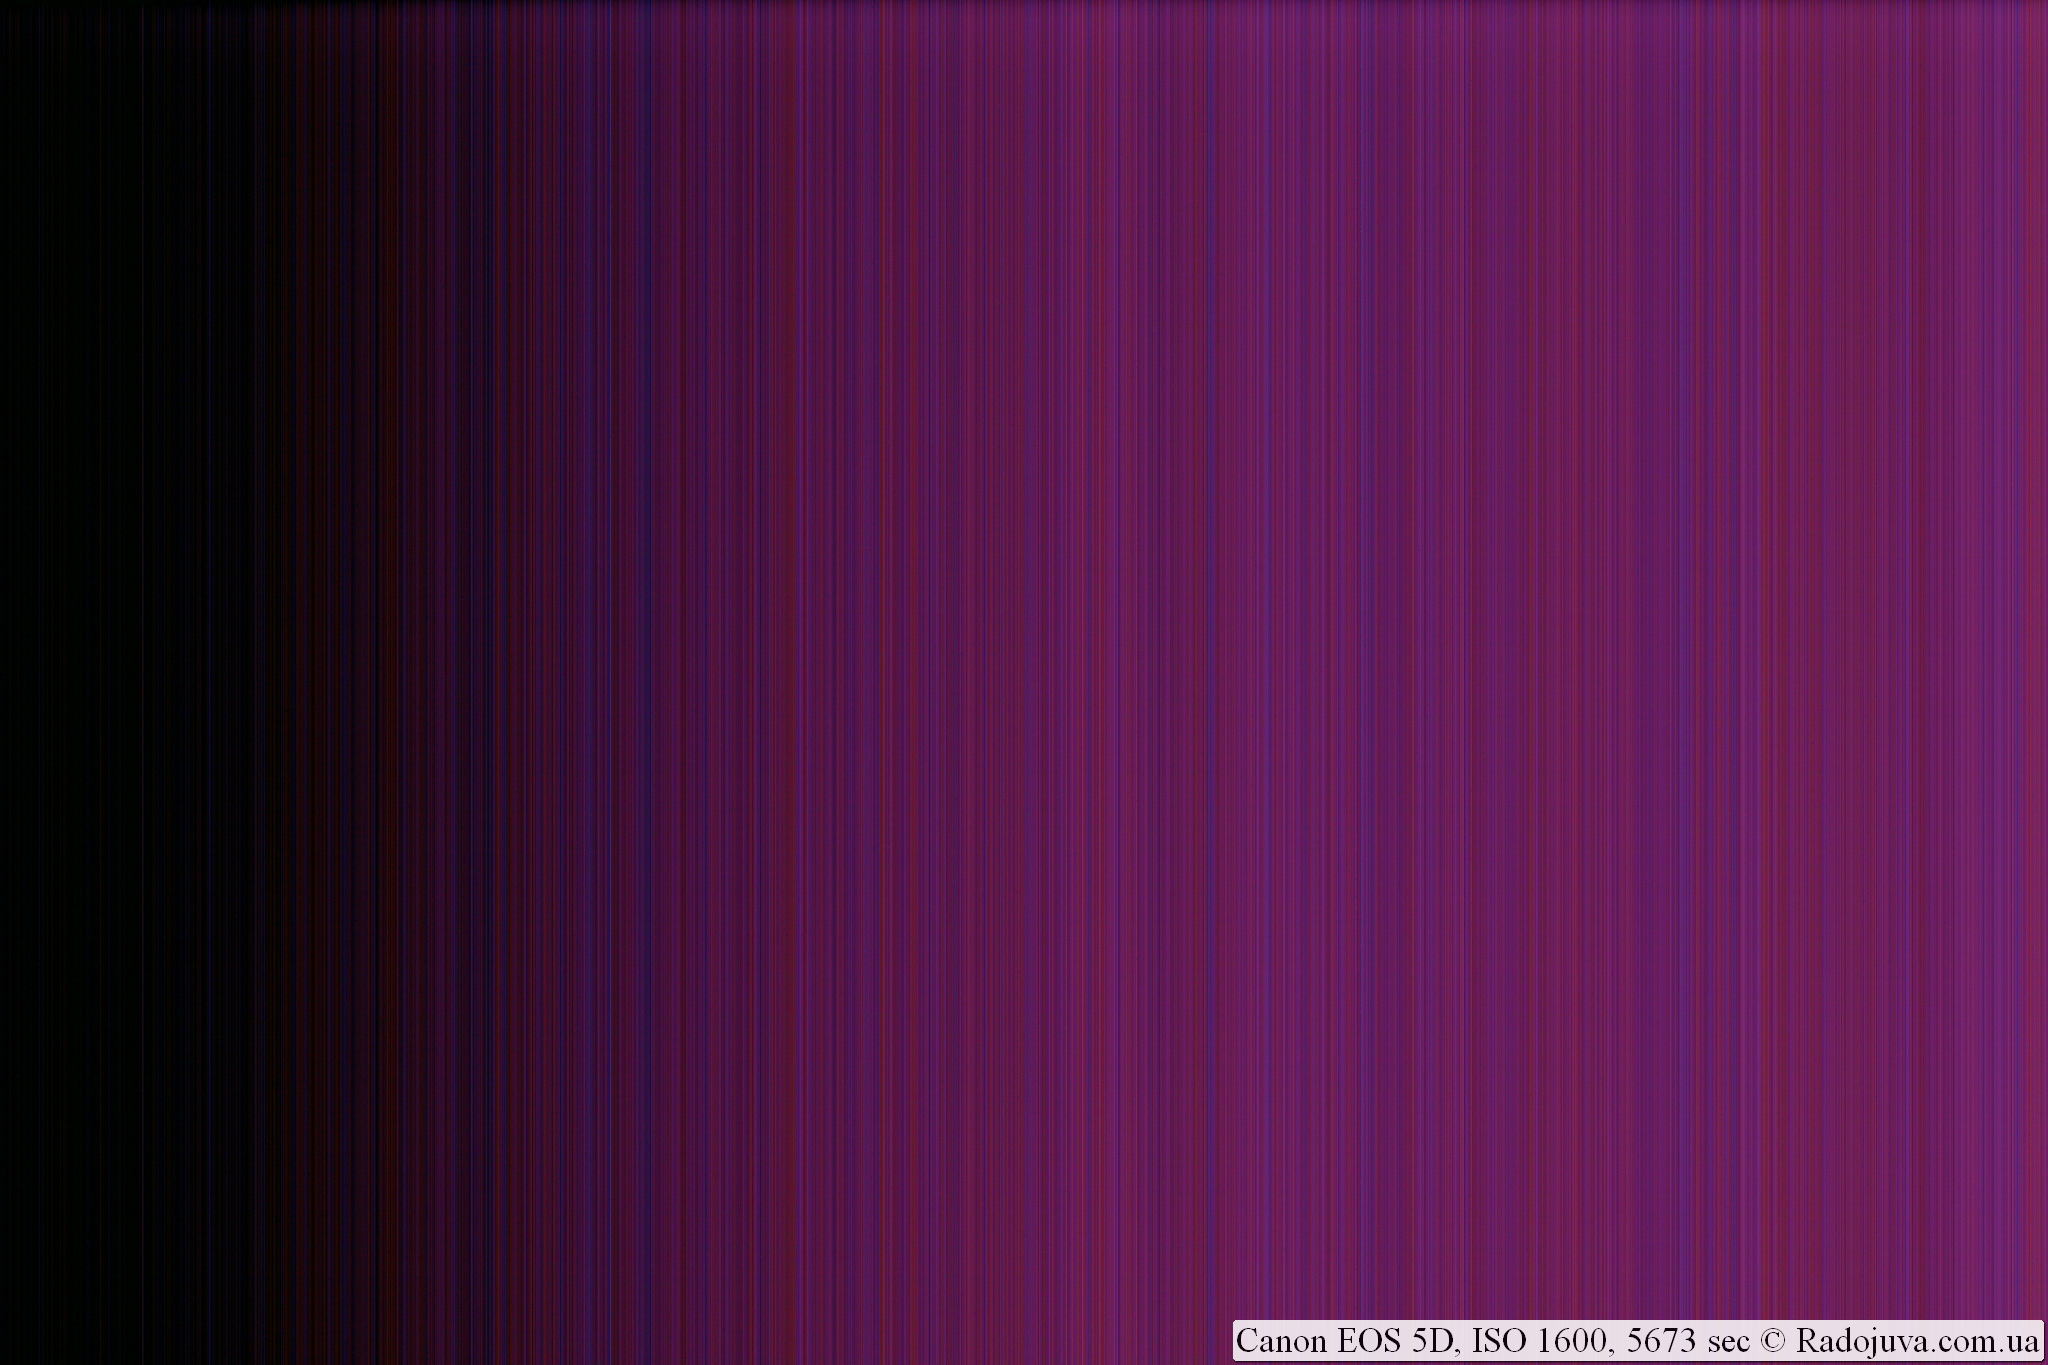 Битые пиксели на матрице. Горячий пиксель. Горячие пиксели на матрице. Картинки для проверки монитора 2560x1440. Как выглядят горячие пиксели.